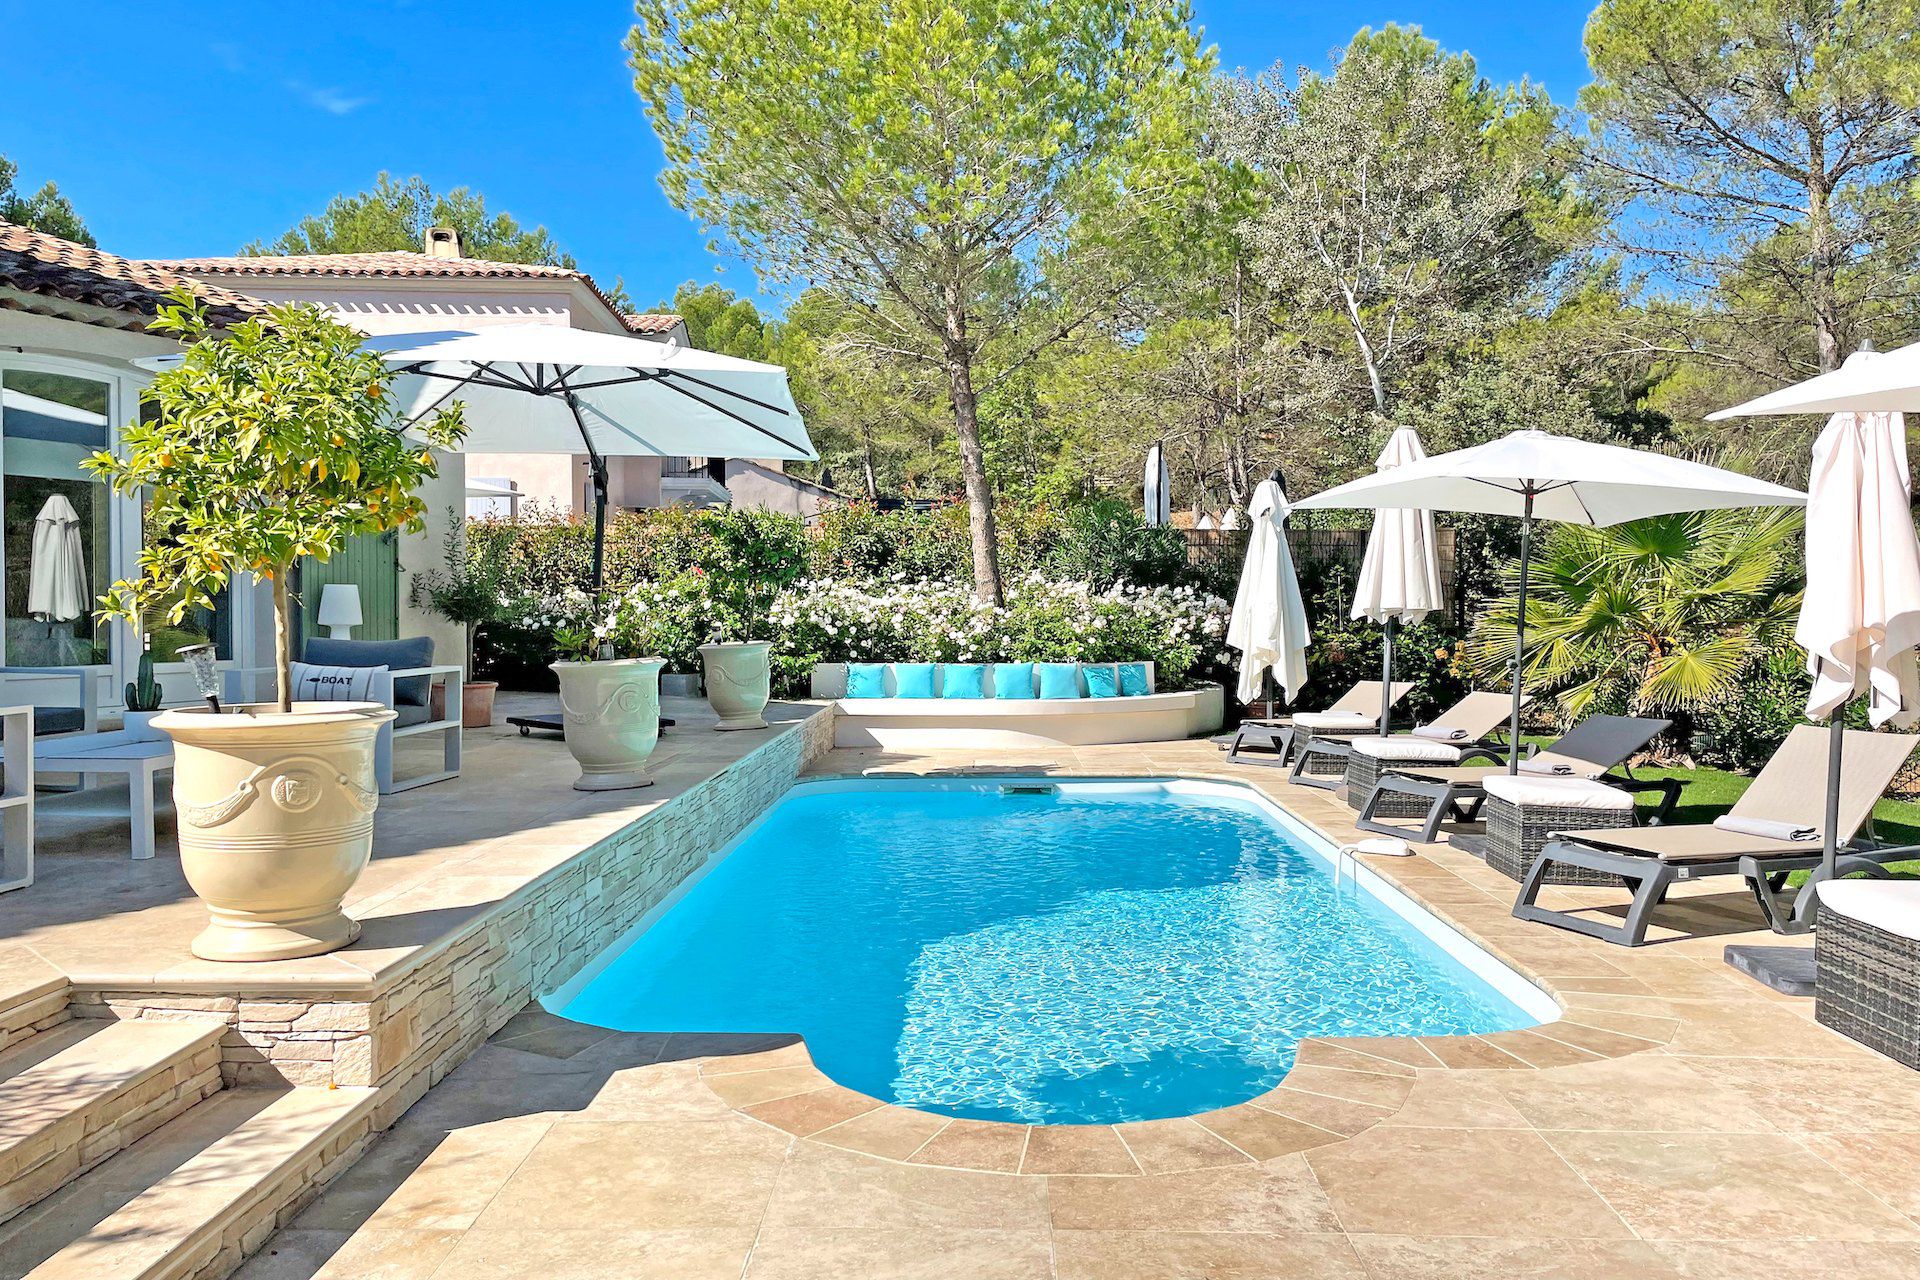 Méditerranée Location Villa with Private pool in Pont Royal - Mallemort, Provence